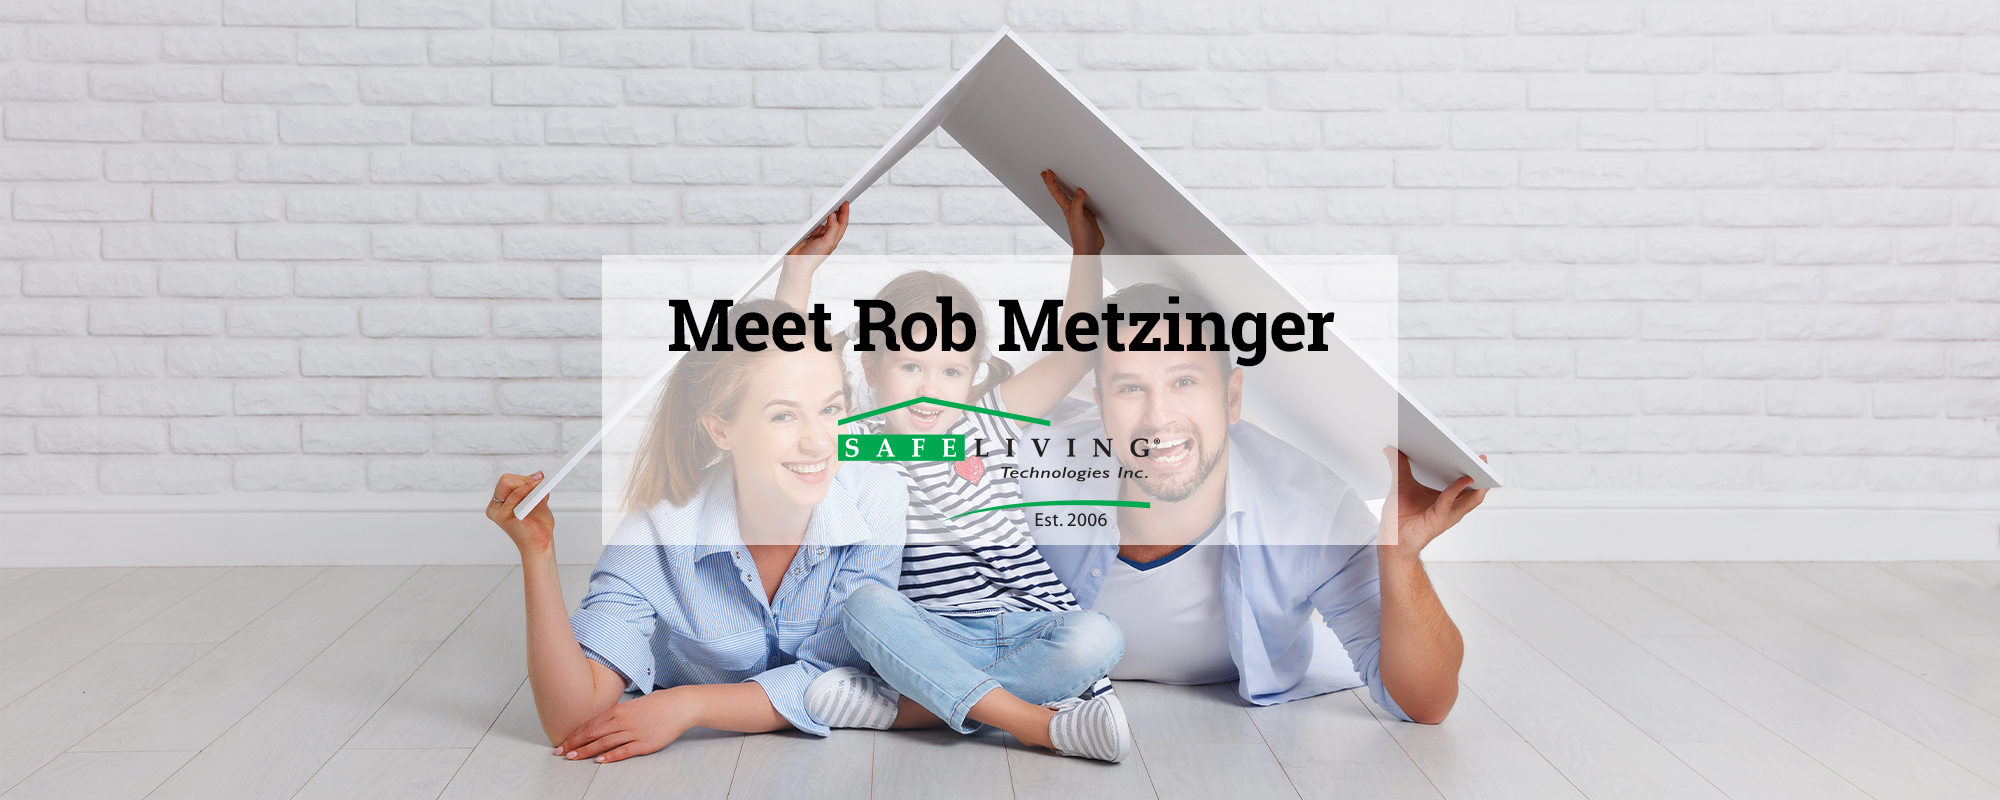 Meet Rob Metzinger